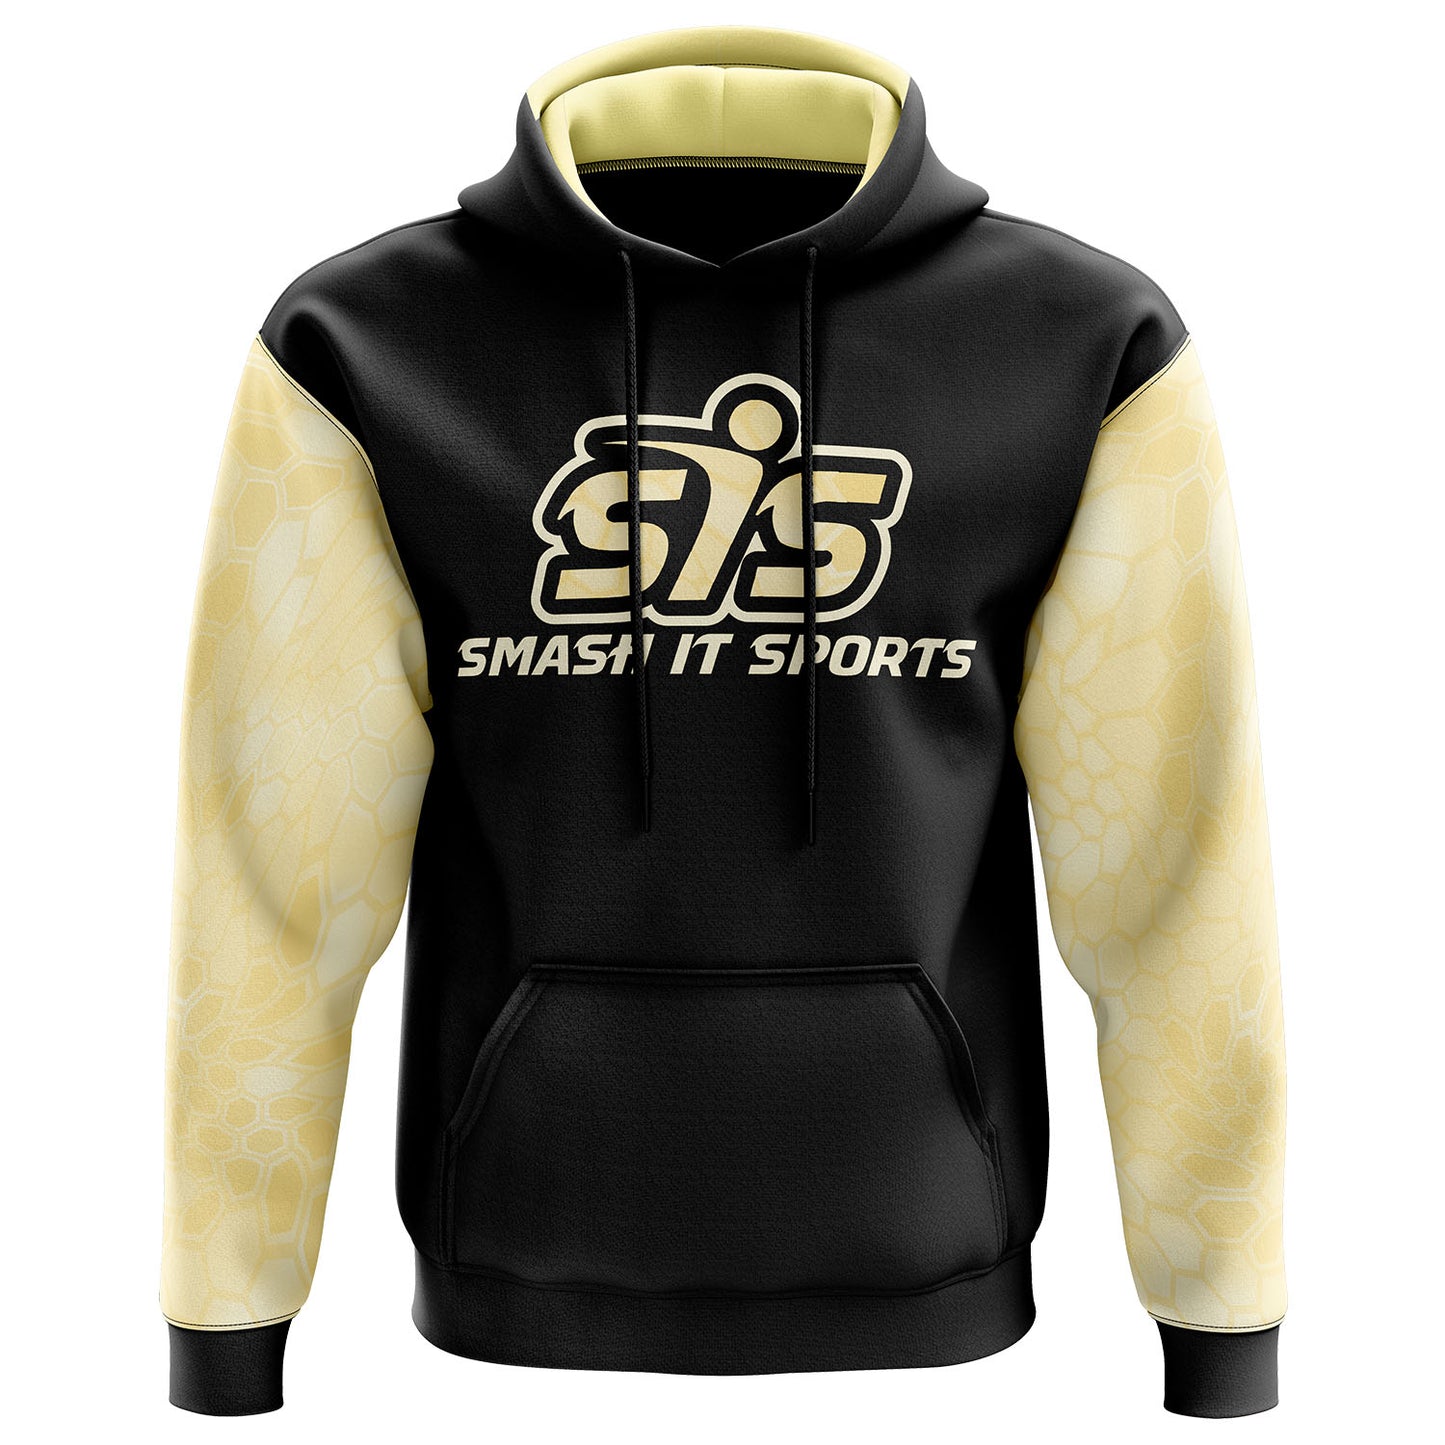 Smash It Sports Core Fleece Hoodie - Black/Vegas Gold